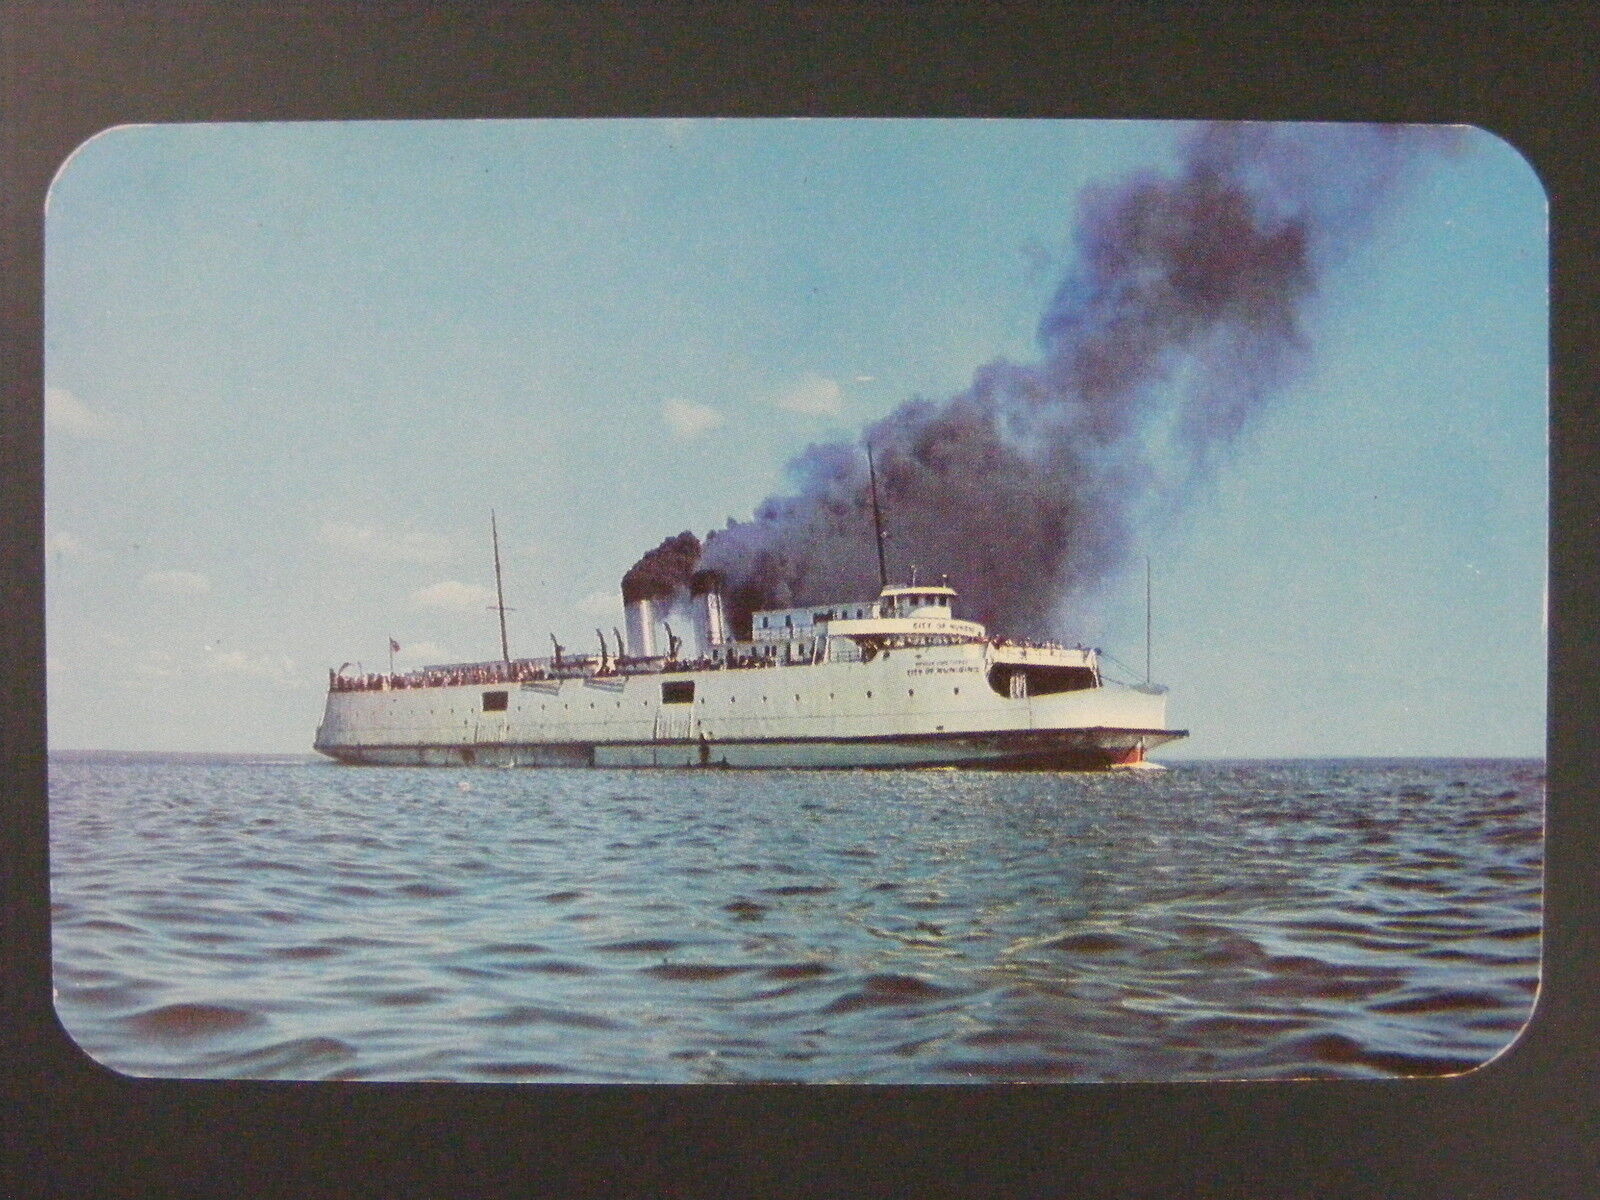 City Of Munising Ferry Boat Michigan Kodachrome Color Postcard Vintage c1950s